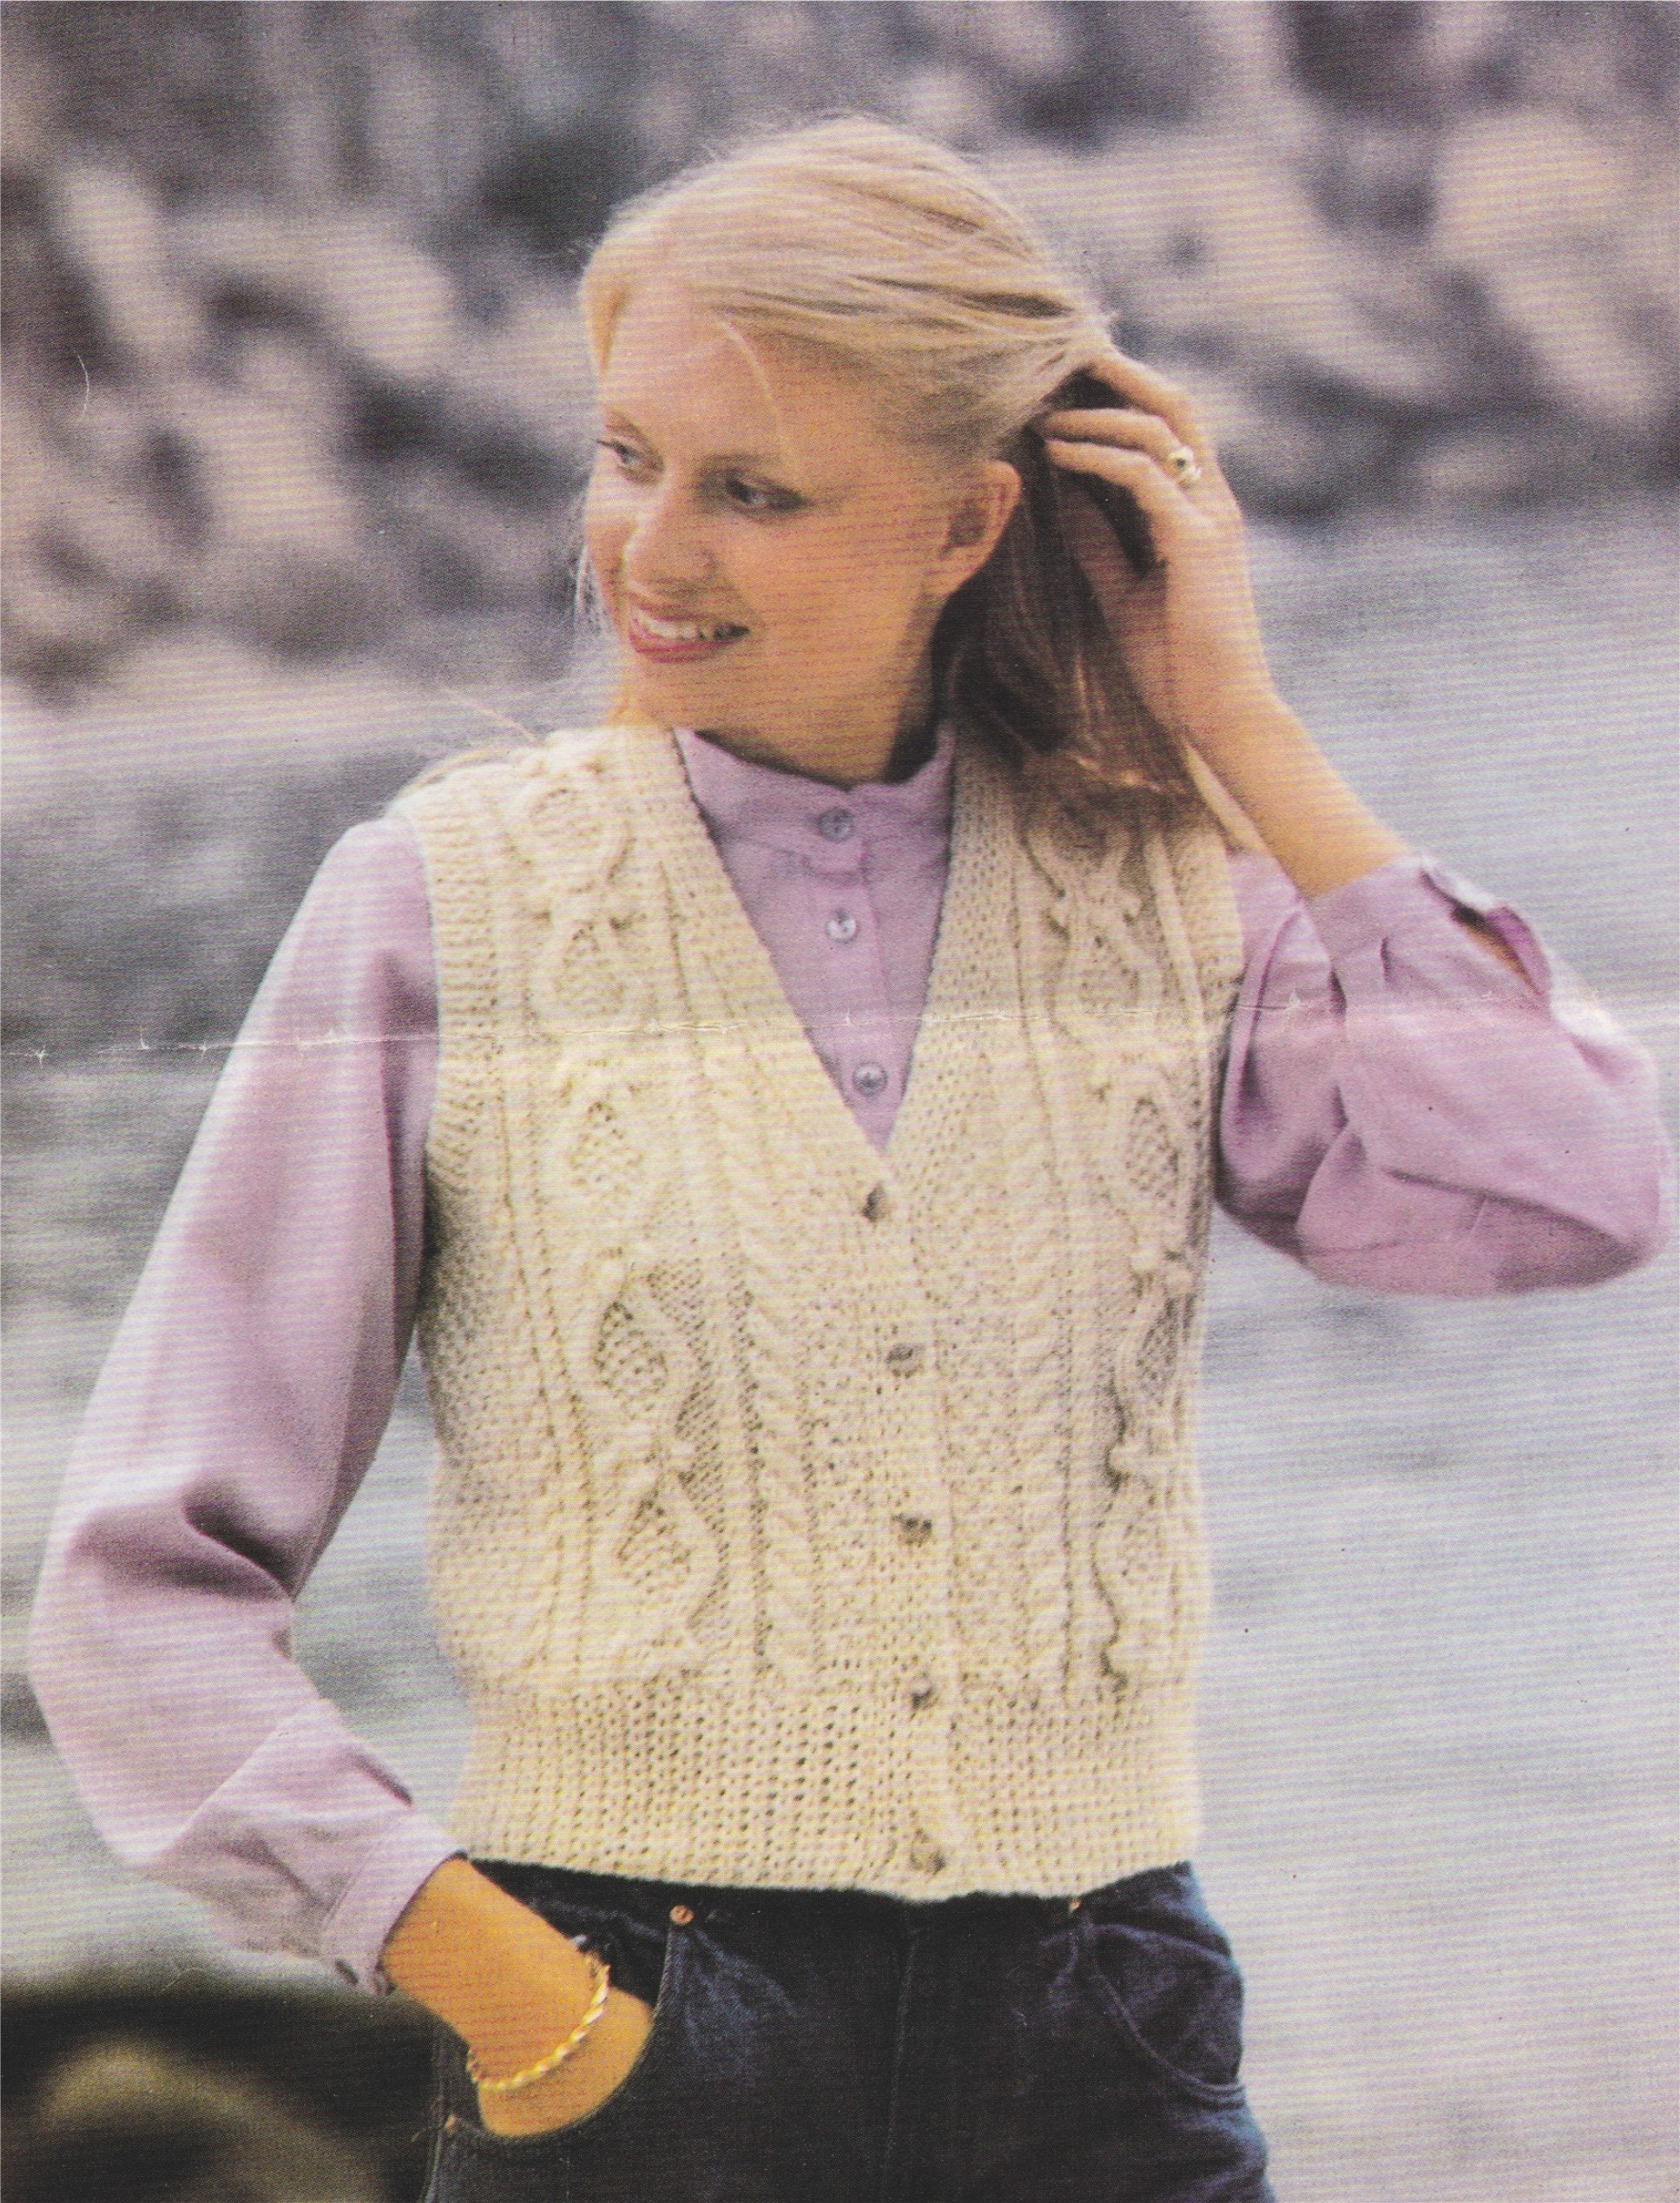 womens waistcoat knitting pattern pdf ladies vest sleeveless cardigan bobble stitch 32-39 inch DK light worsted 8ply pdf instant download